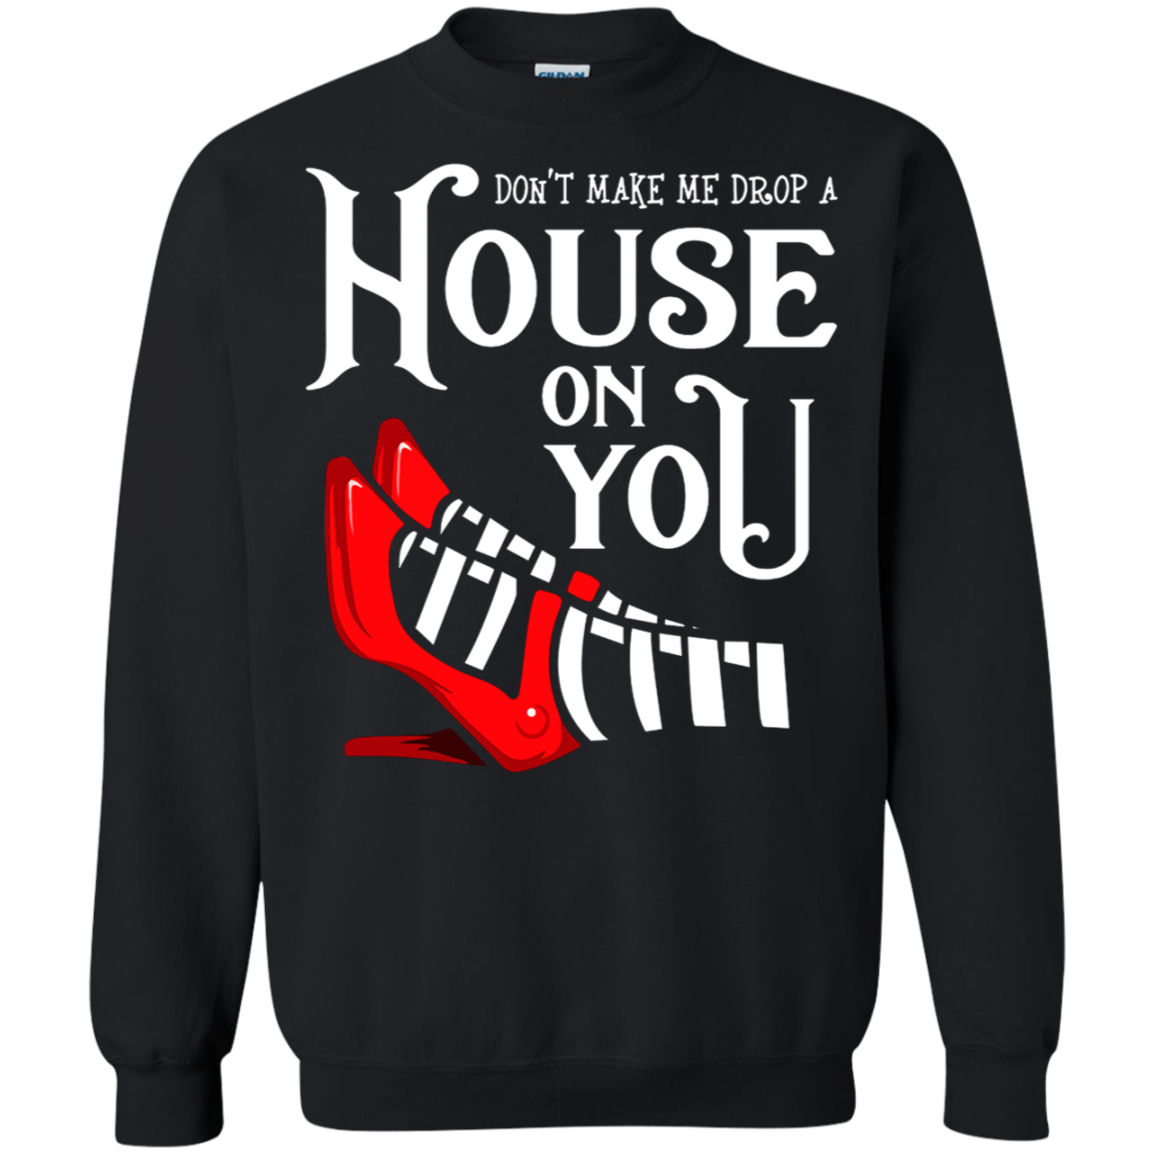 Donâ™t Make Me Drop A House On You Halloween Shirt G180 Crewneck Pullover 8 Oz.